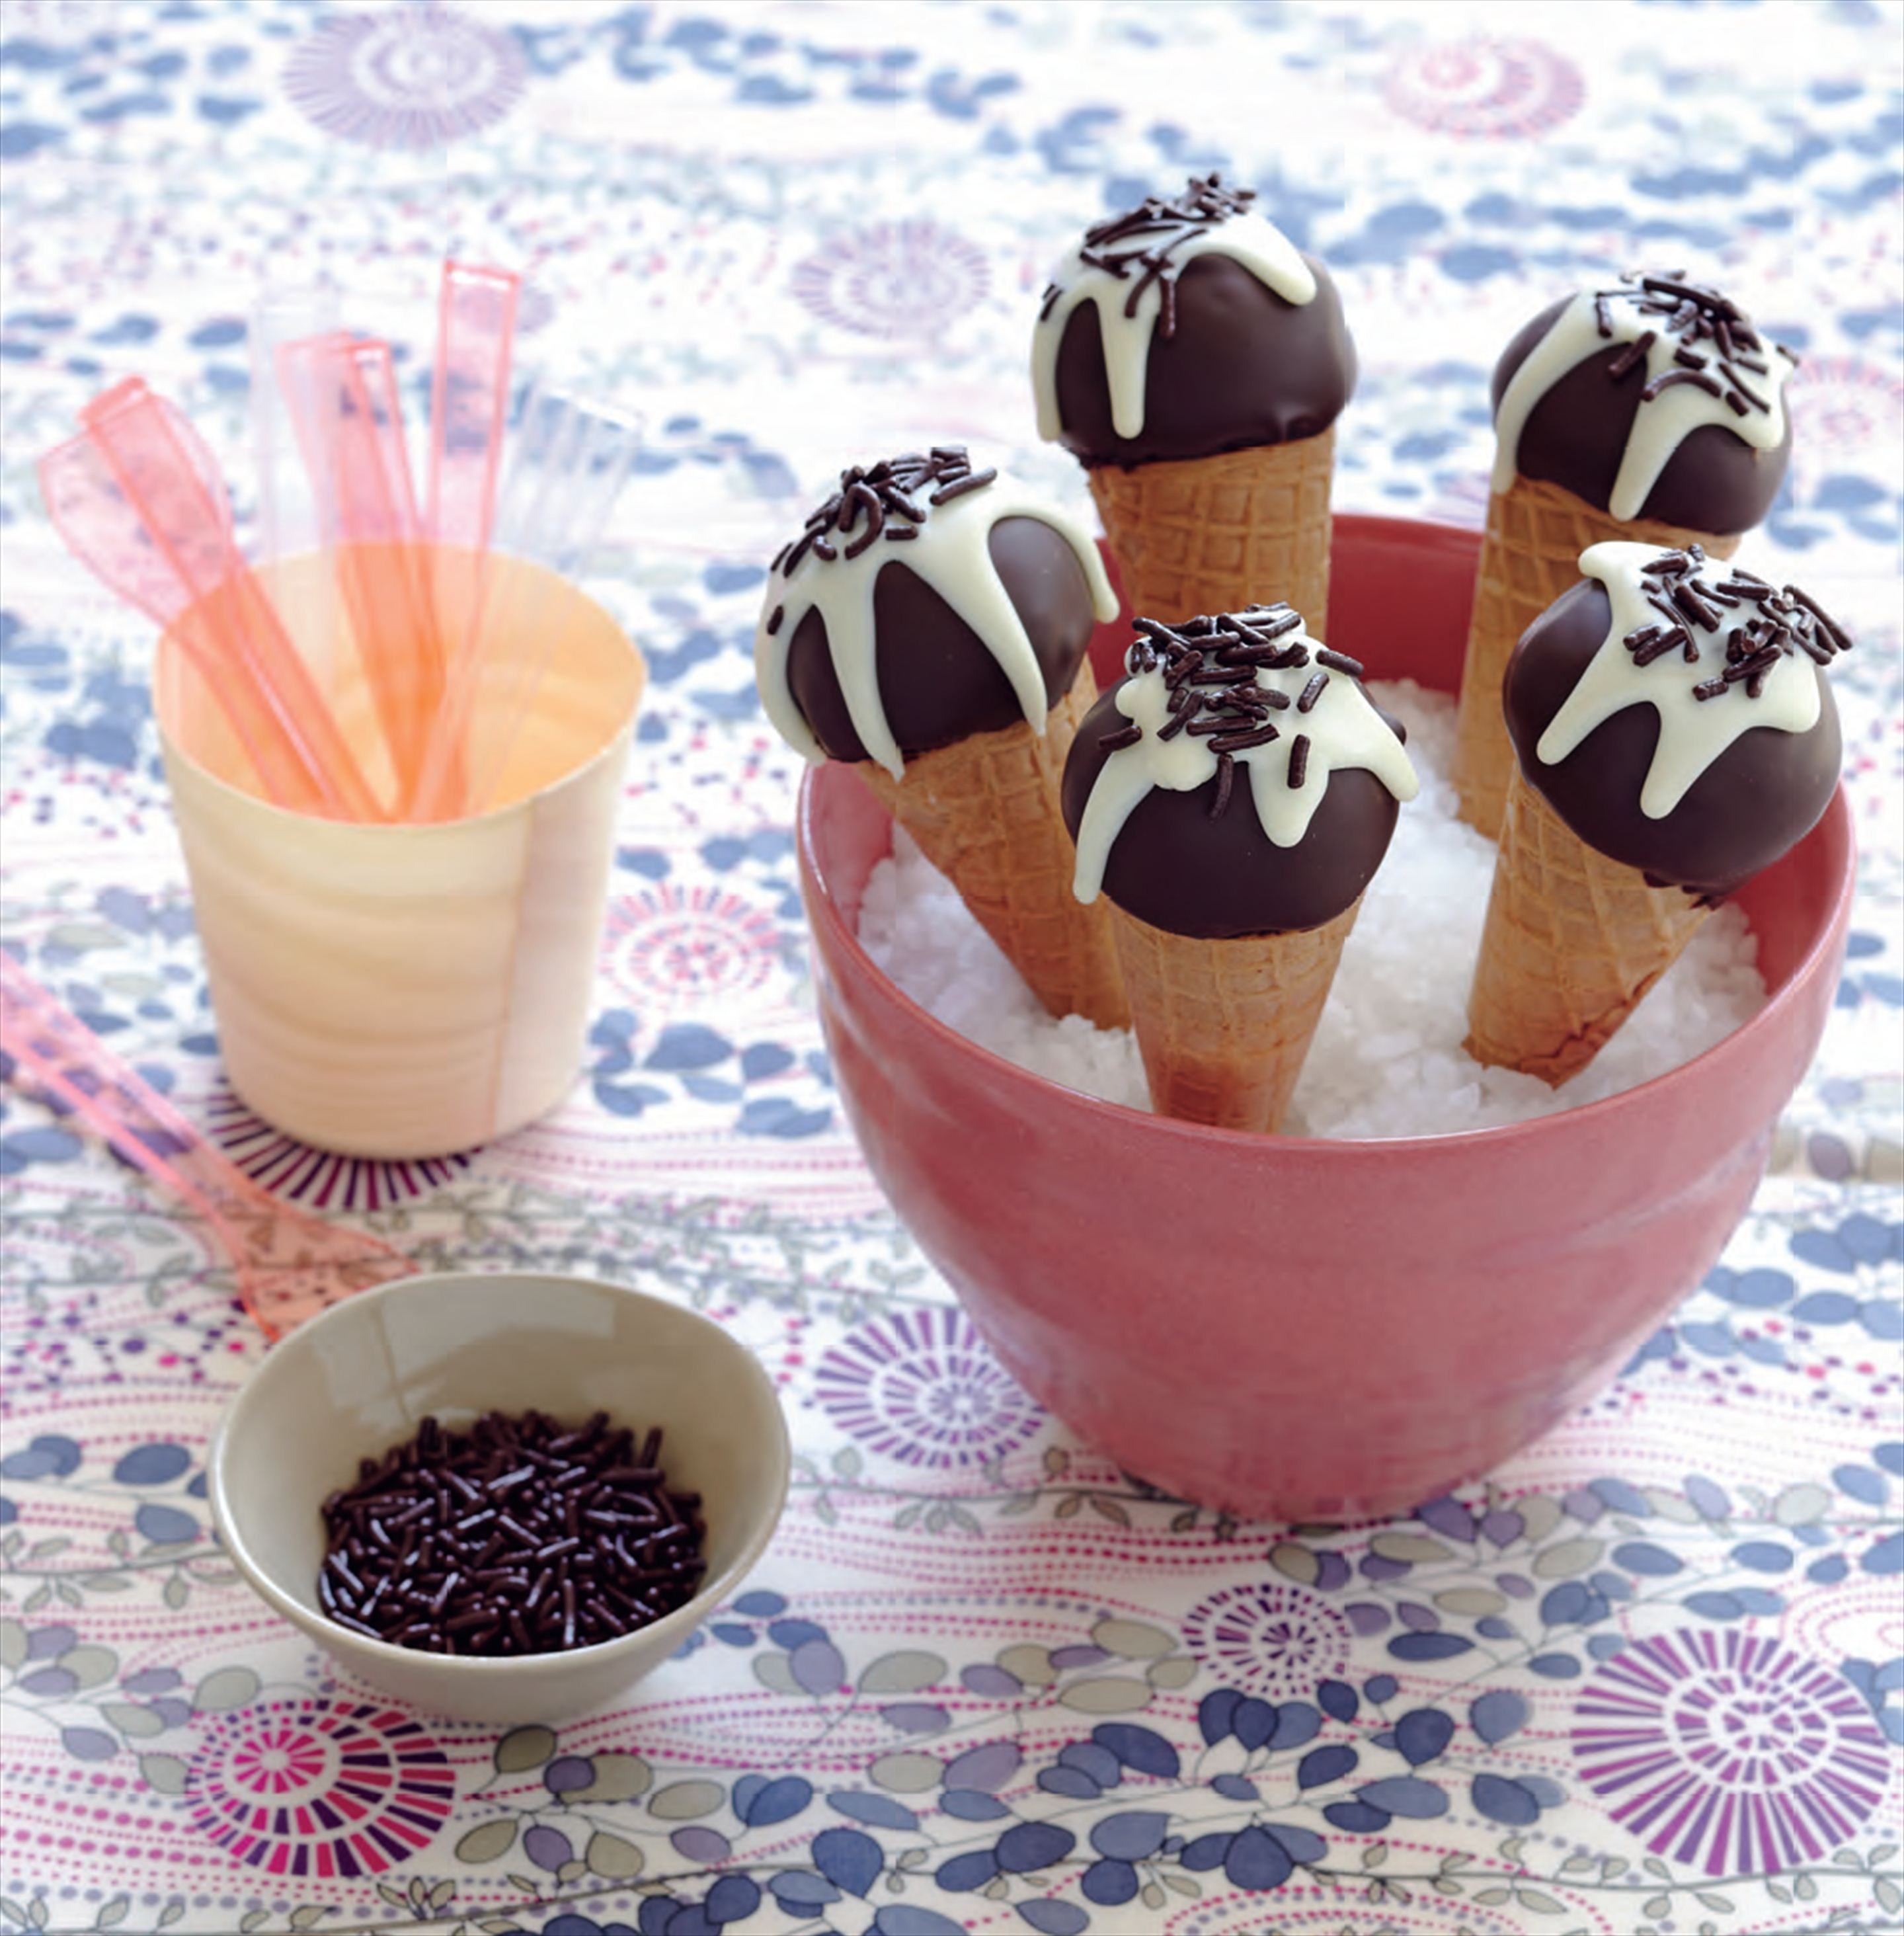 Ice-cream cake pops